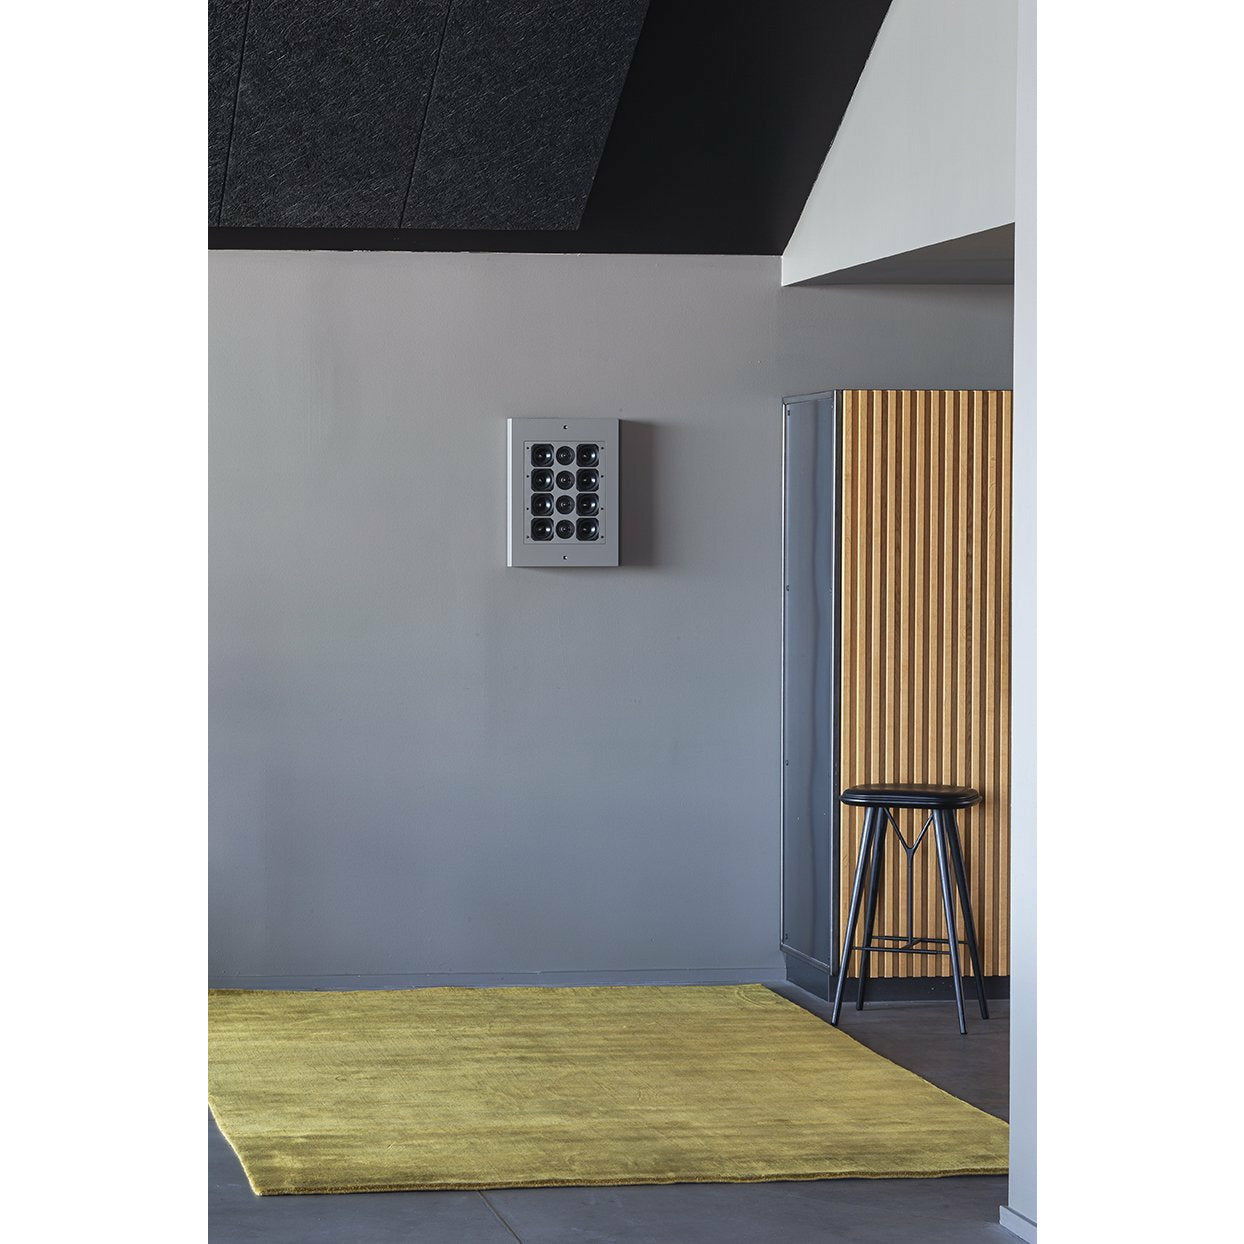 Massimo Earth Bamboo alfombra china amarillo, 200x300 cm